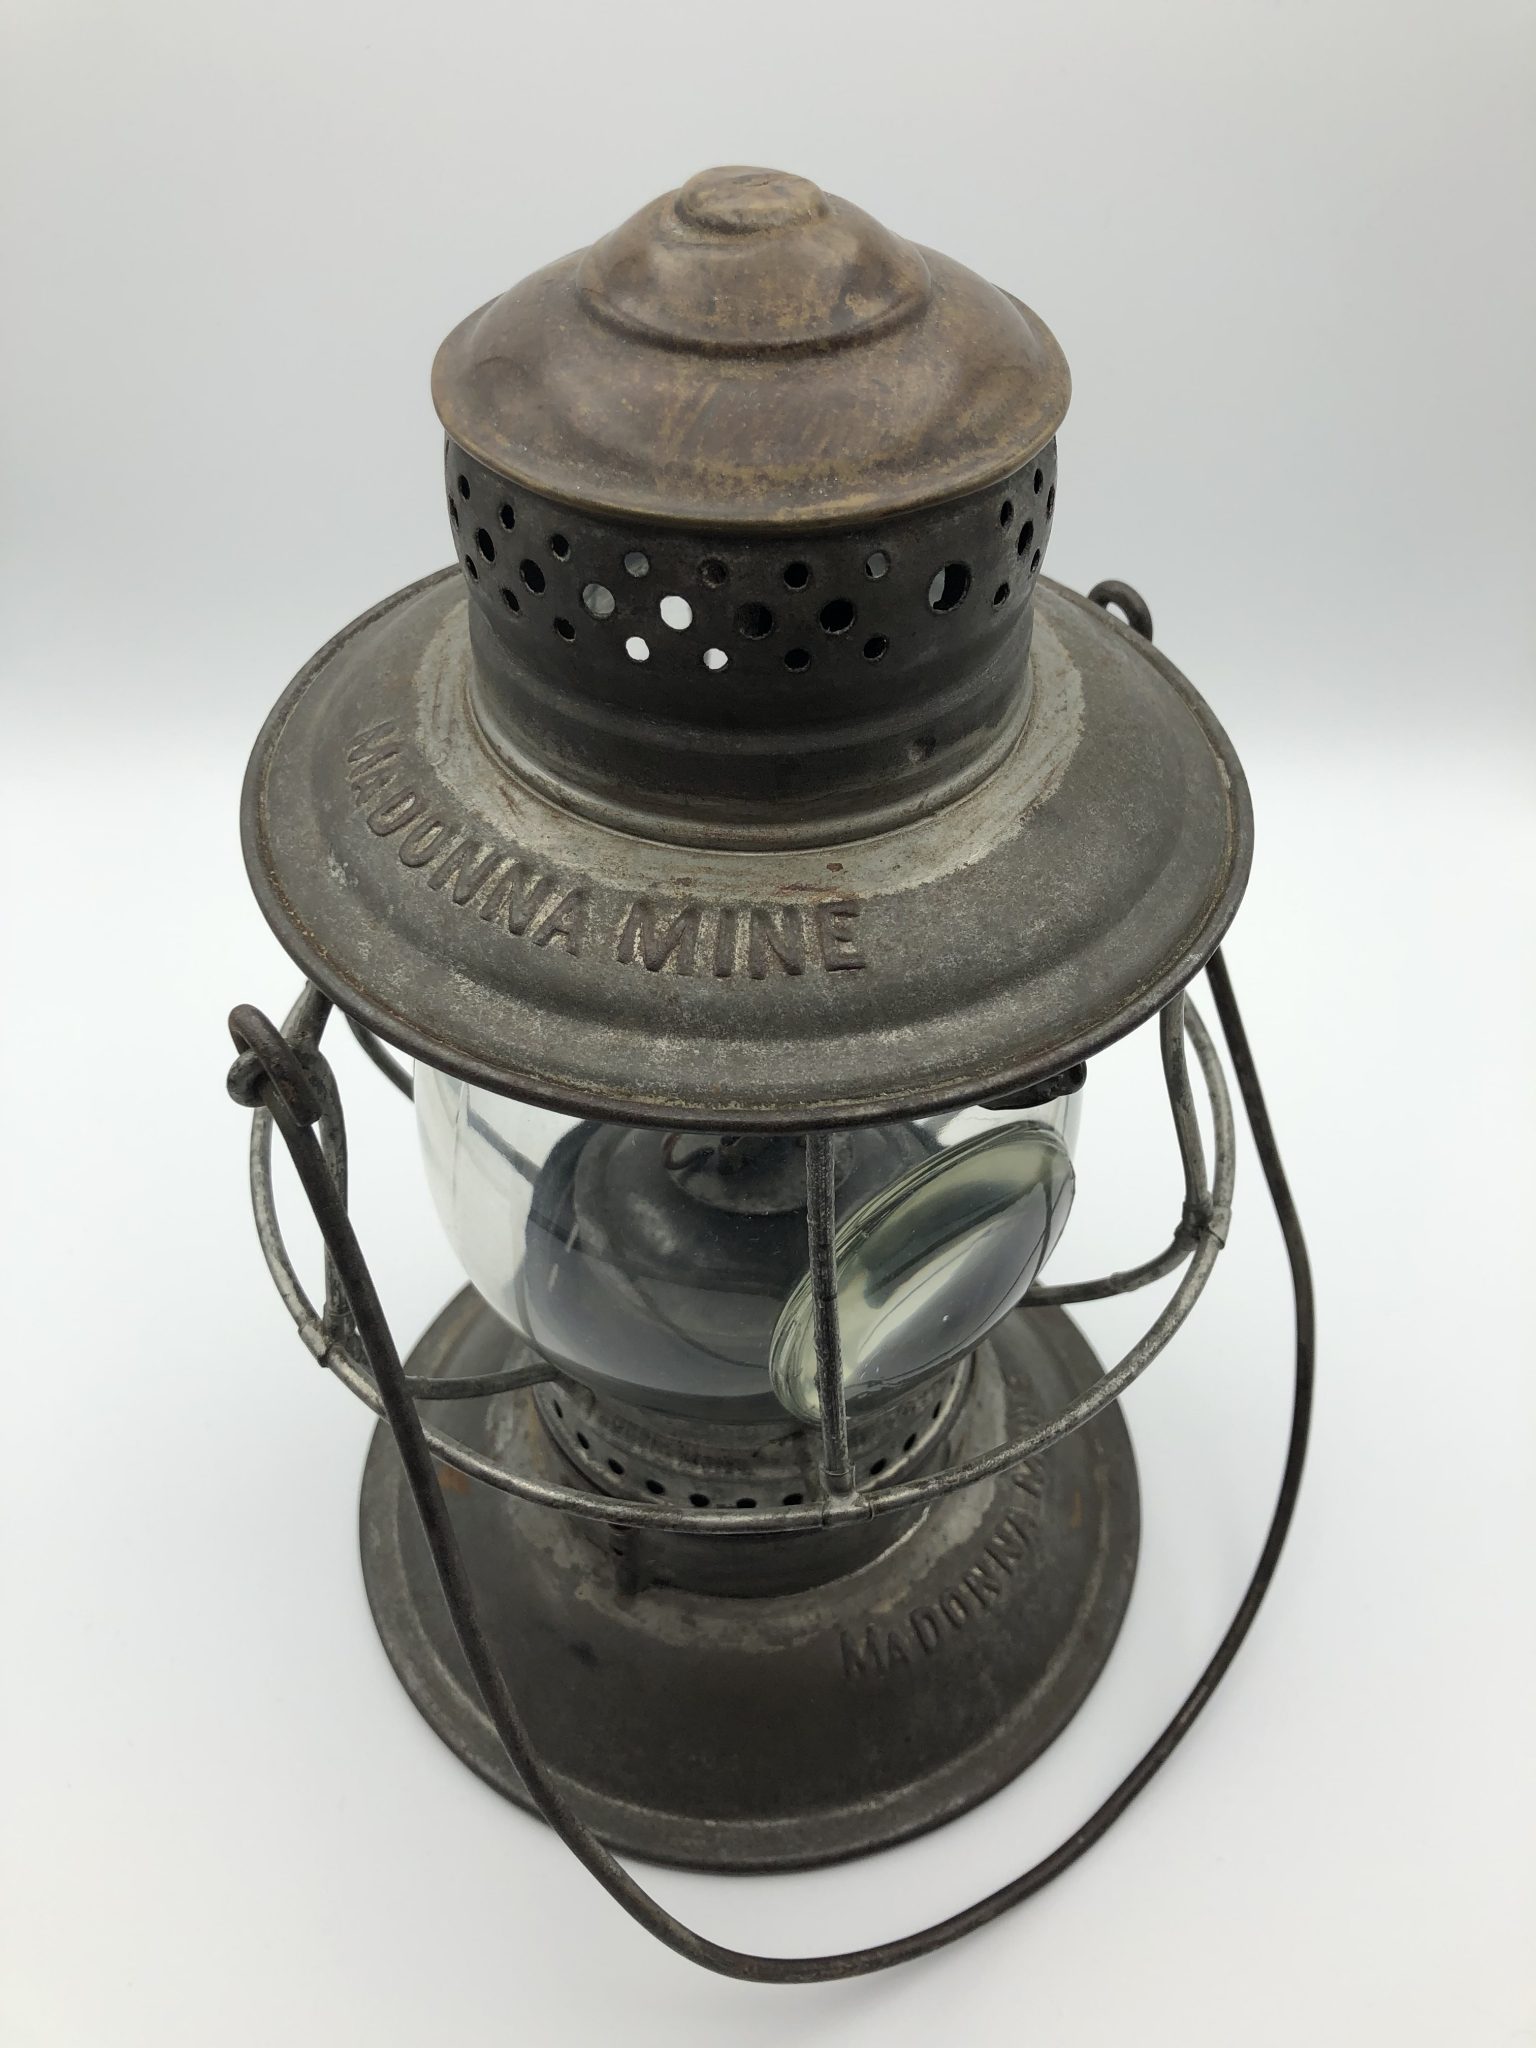 Colorado Madonna Mine Railroad Lantern